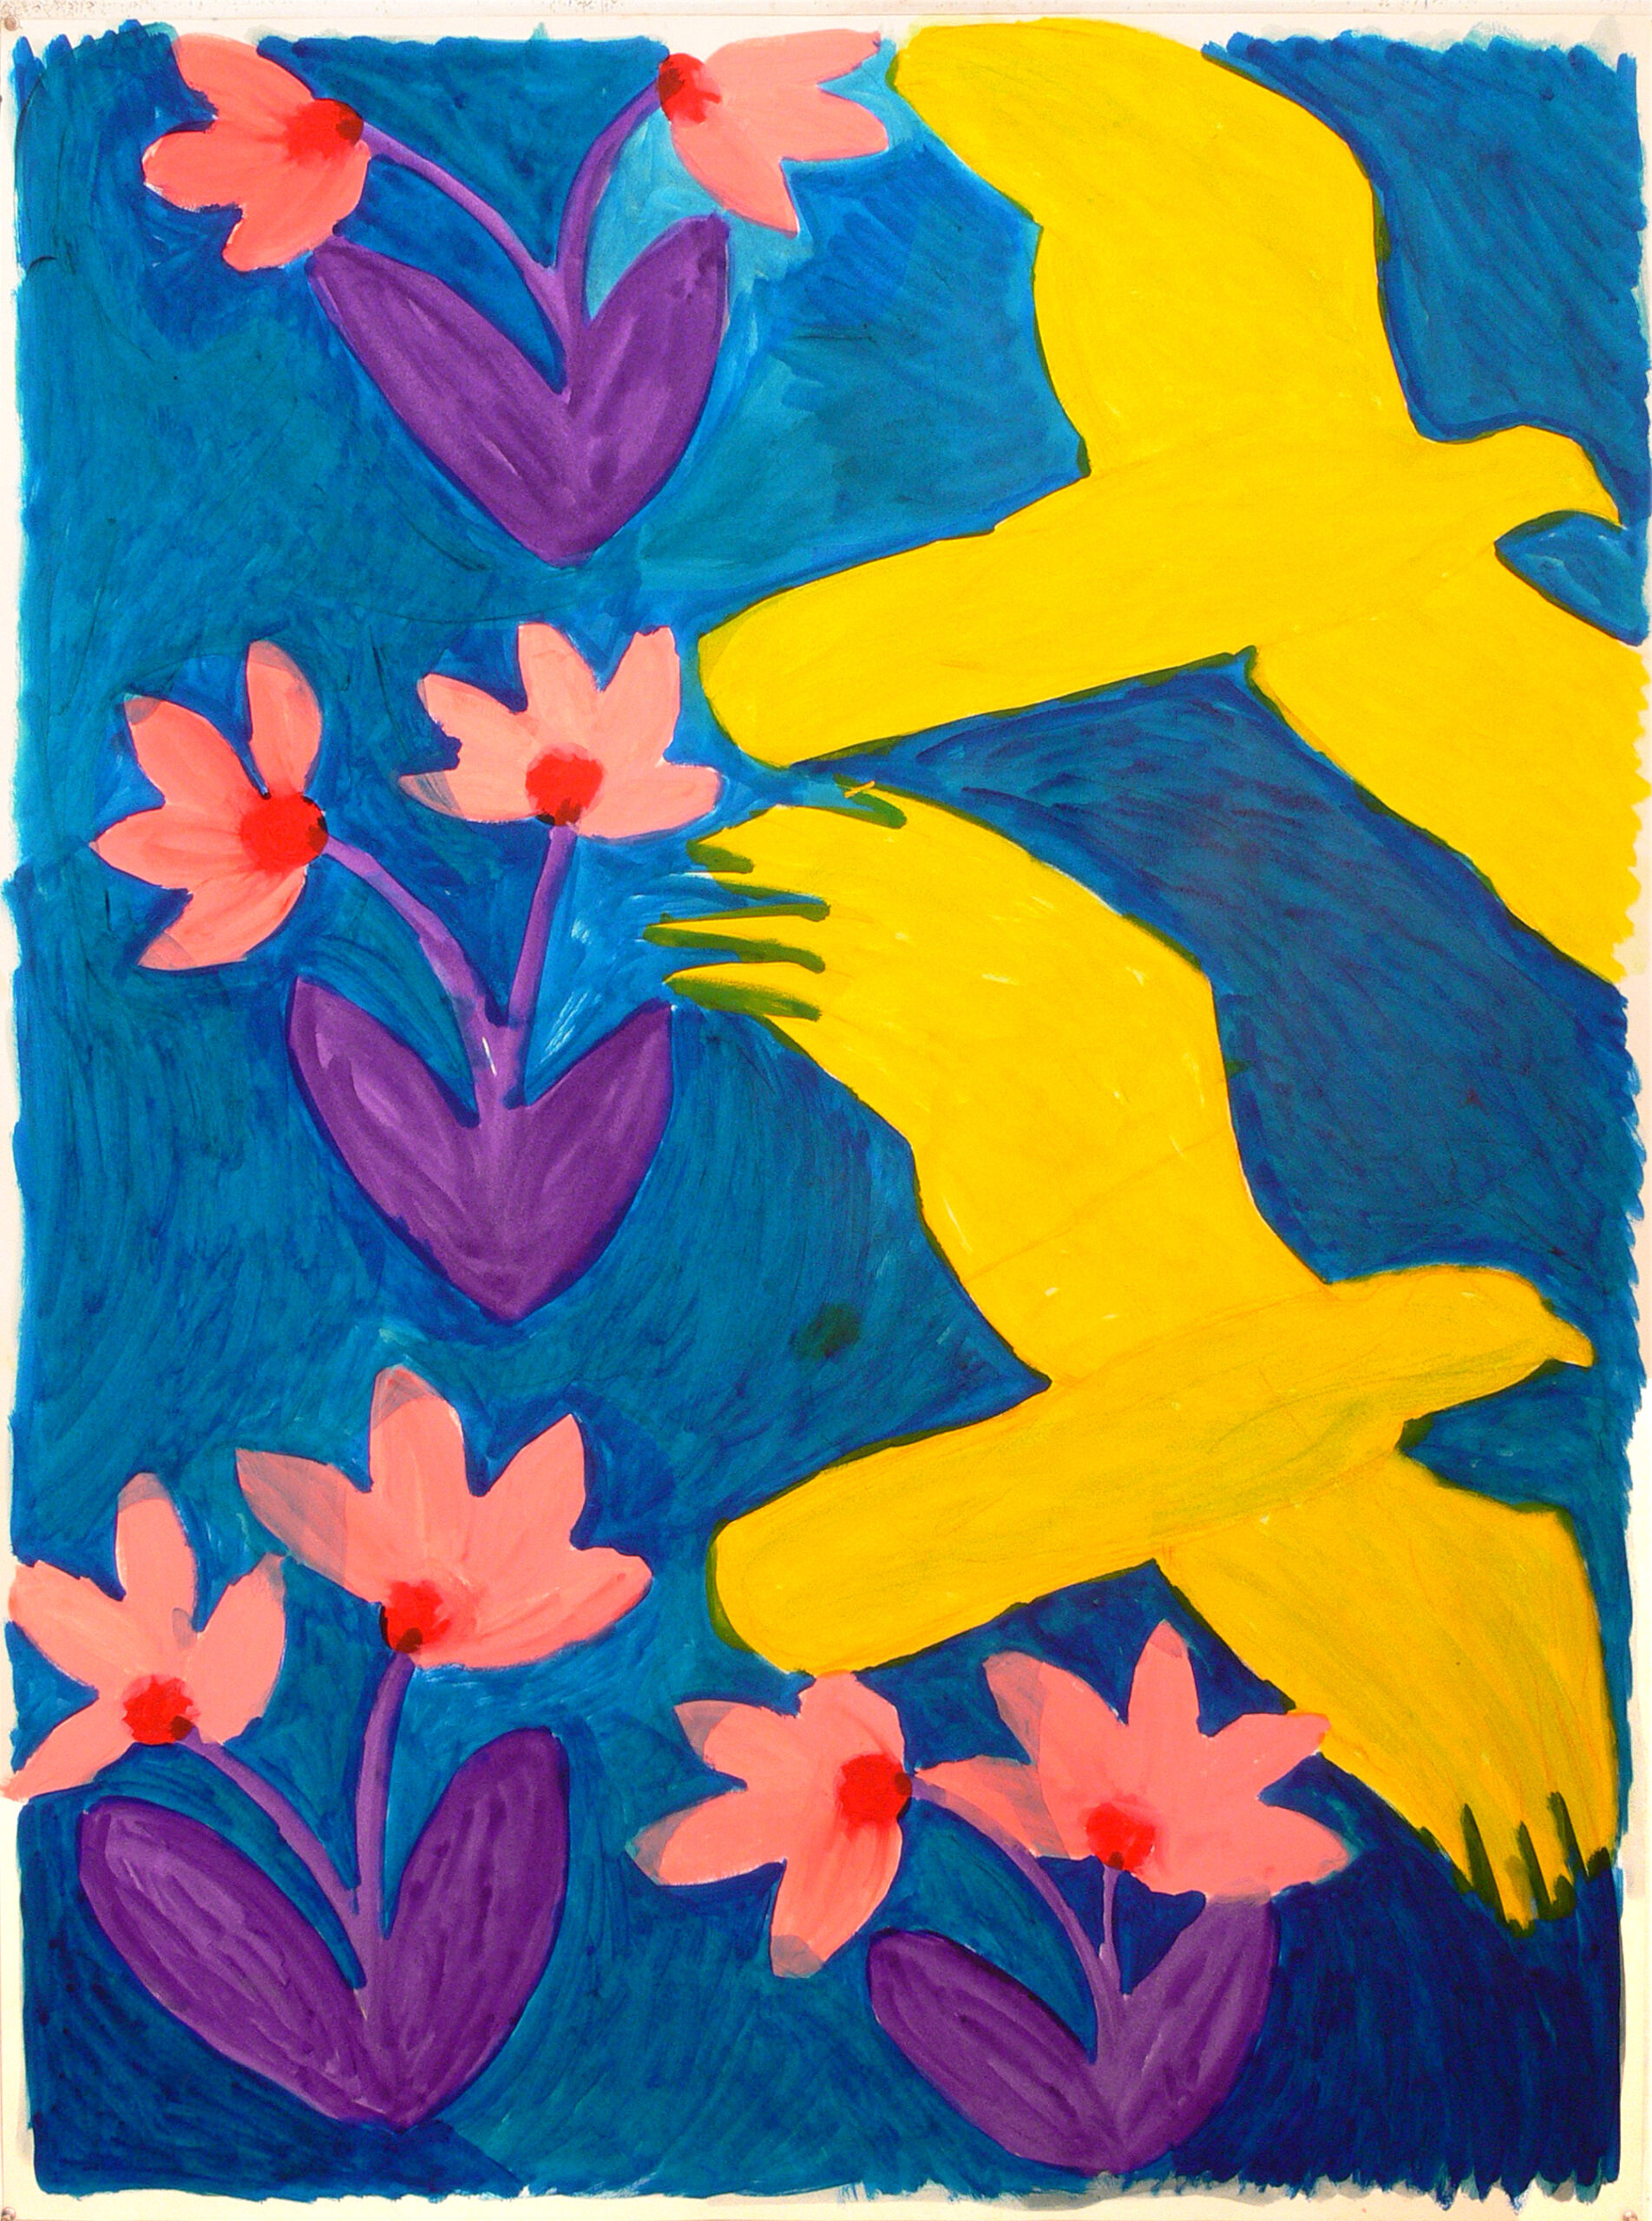 Flowers ans birds, 2007